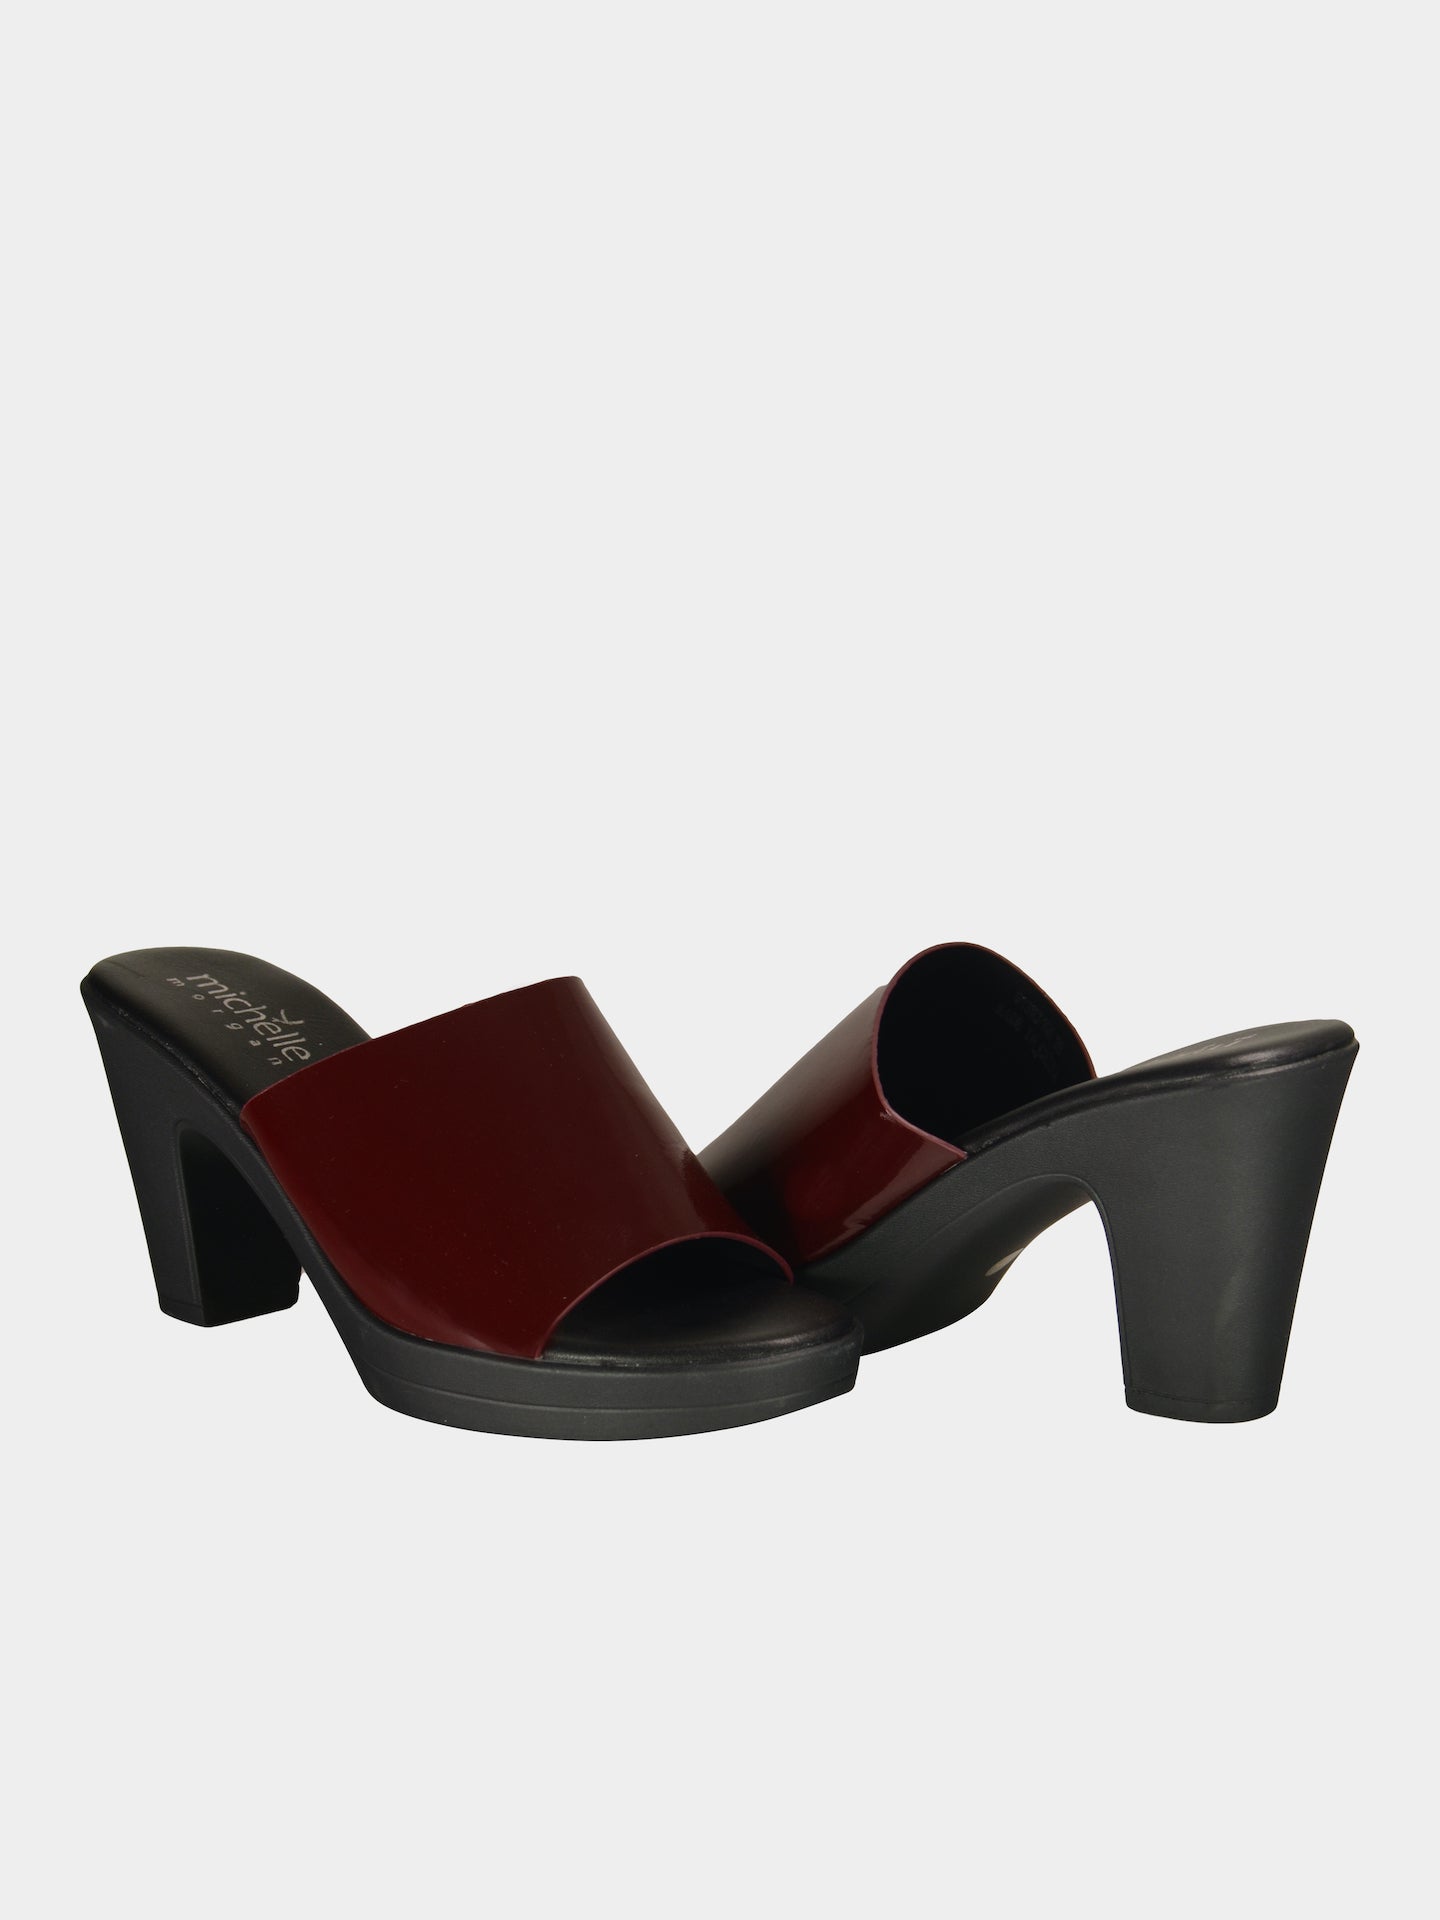 Michelle Morgan 913RJ166 Women's Heeled Sandals #color_Maroon